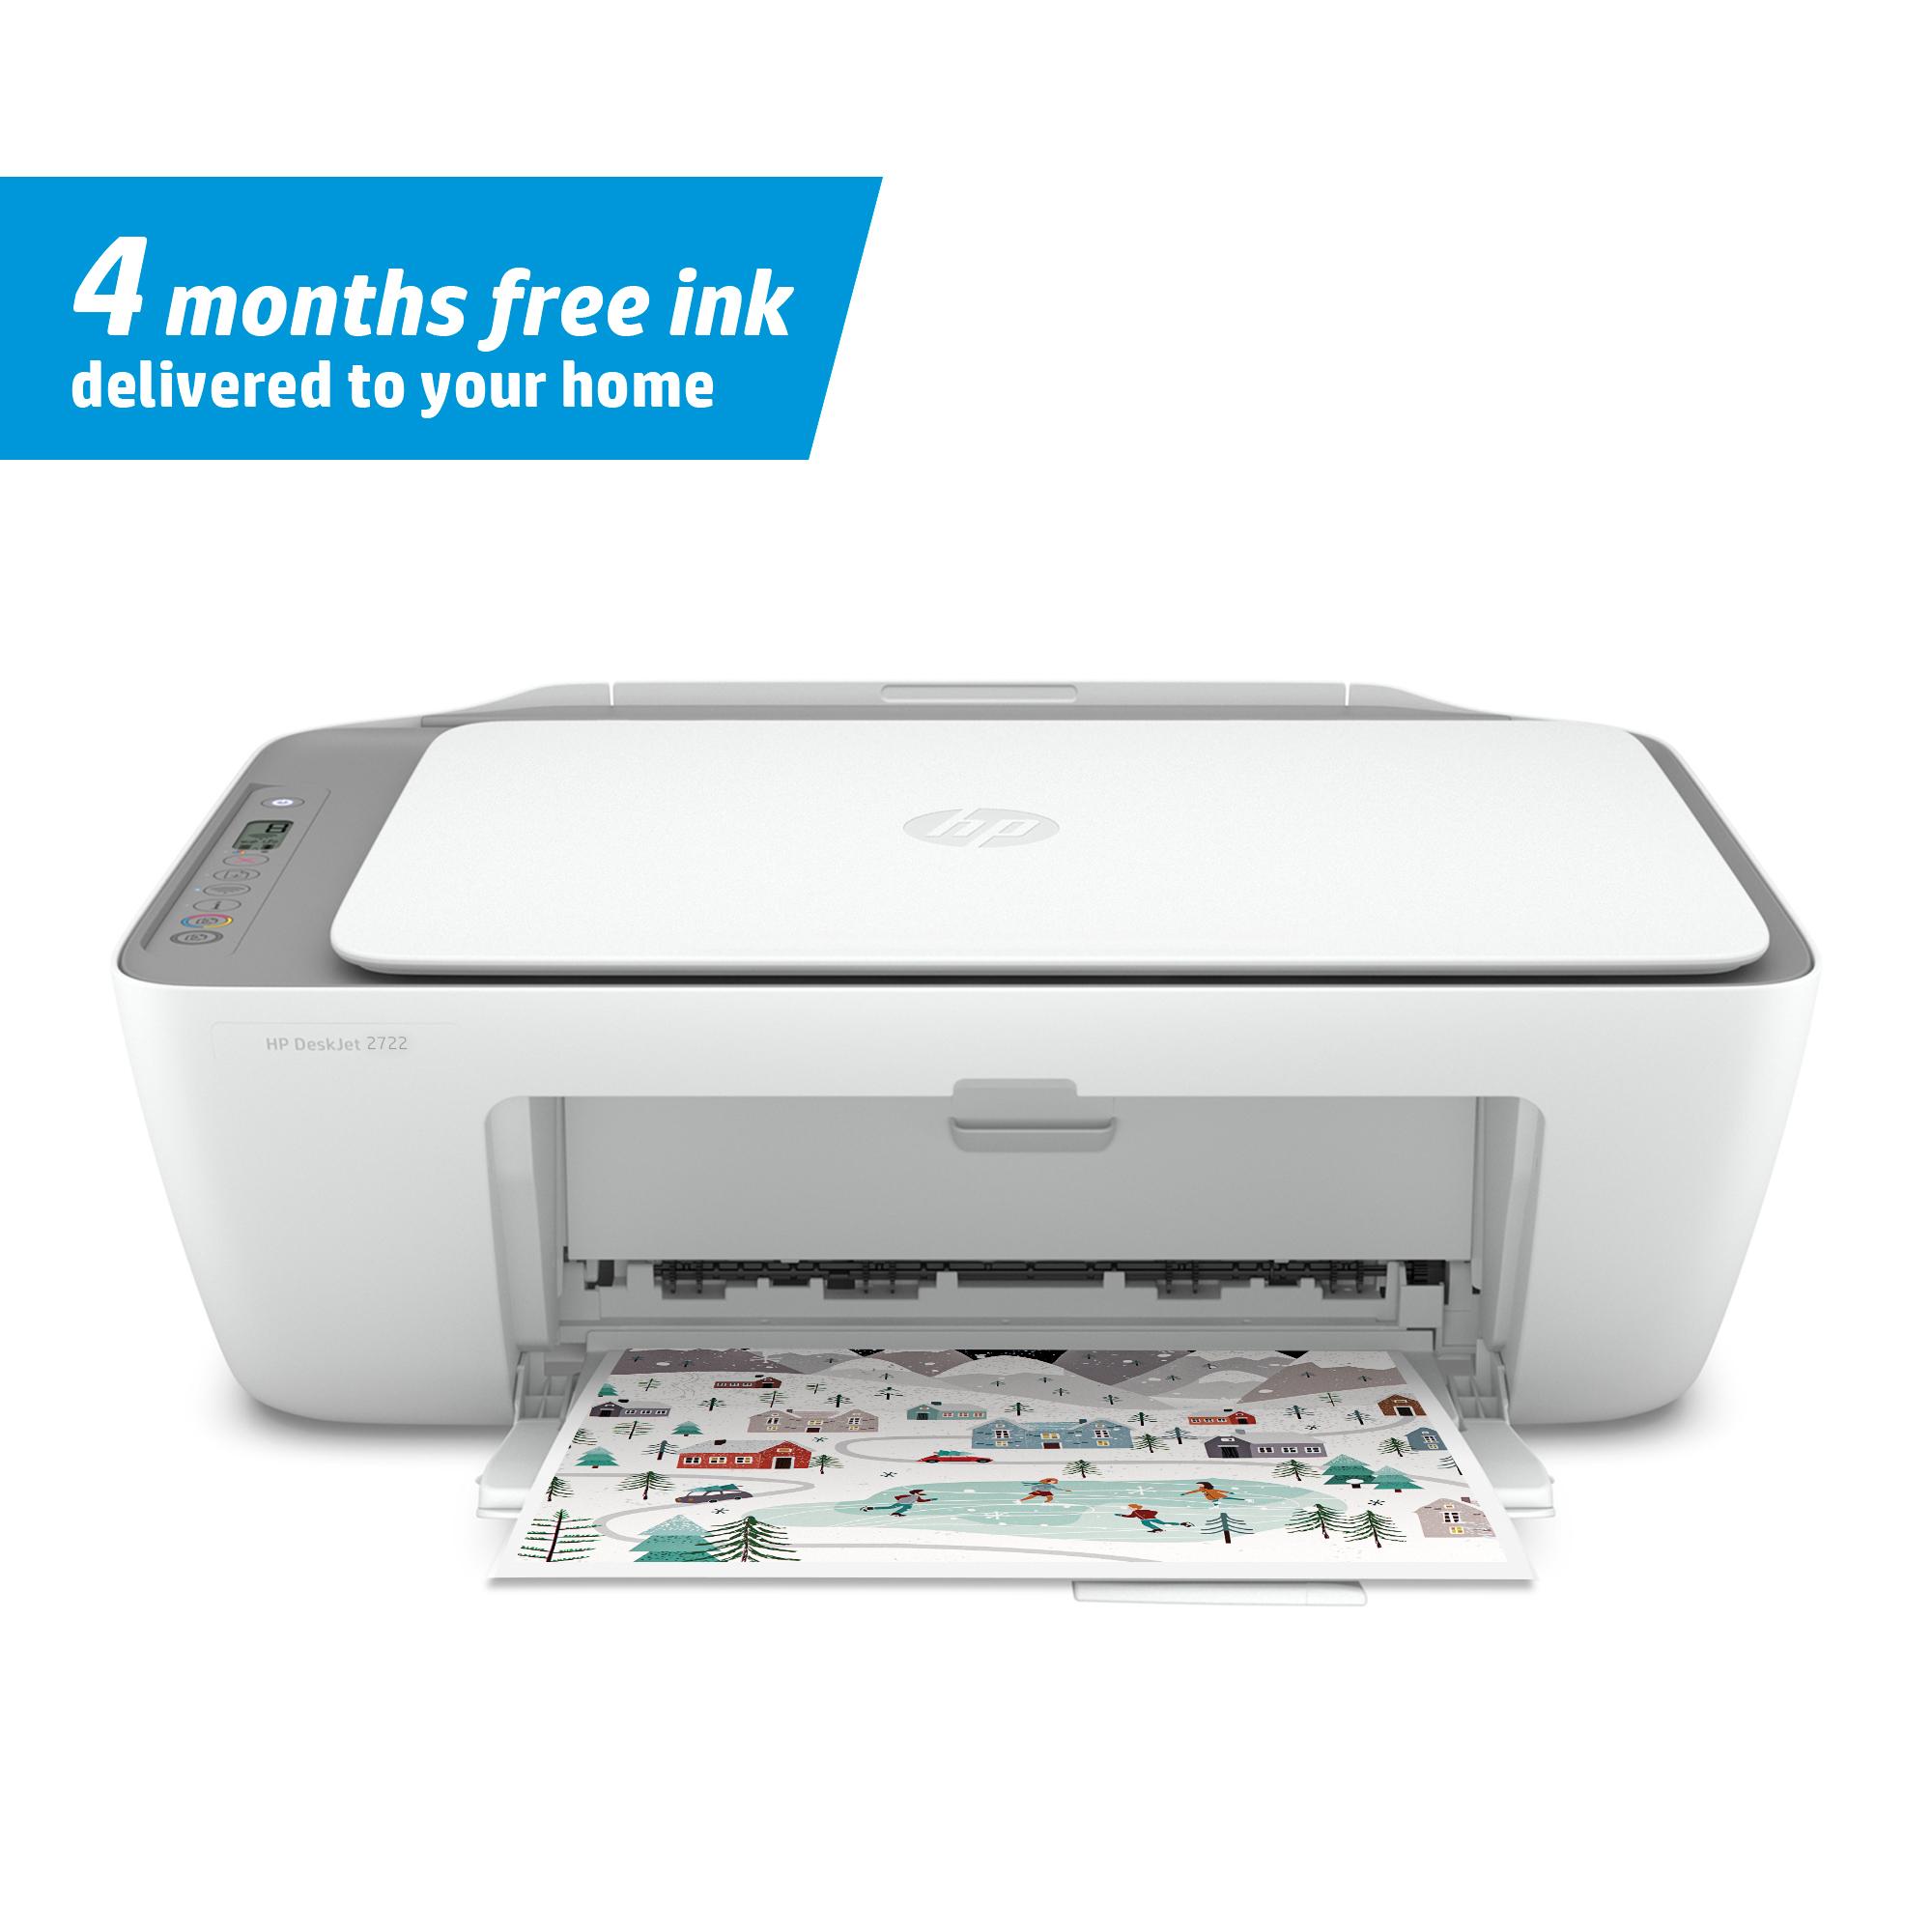 HP DeskJet 2722 All-in-One Wireless Color Inkjet Printer for $24